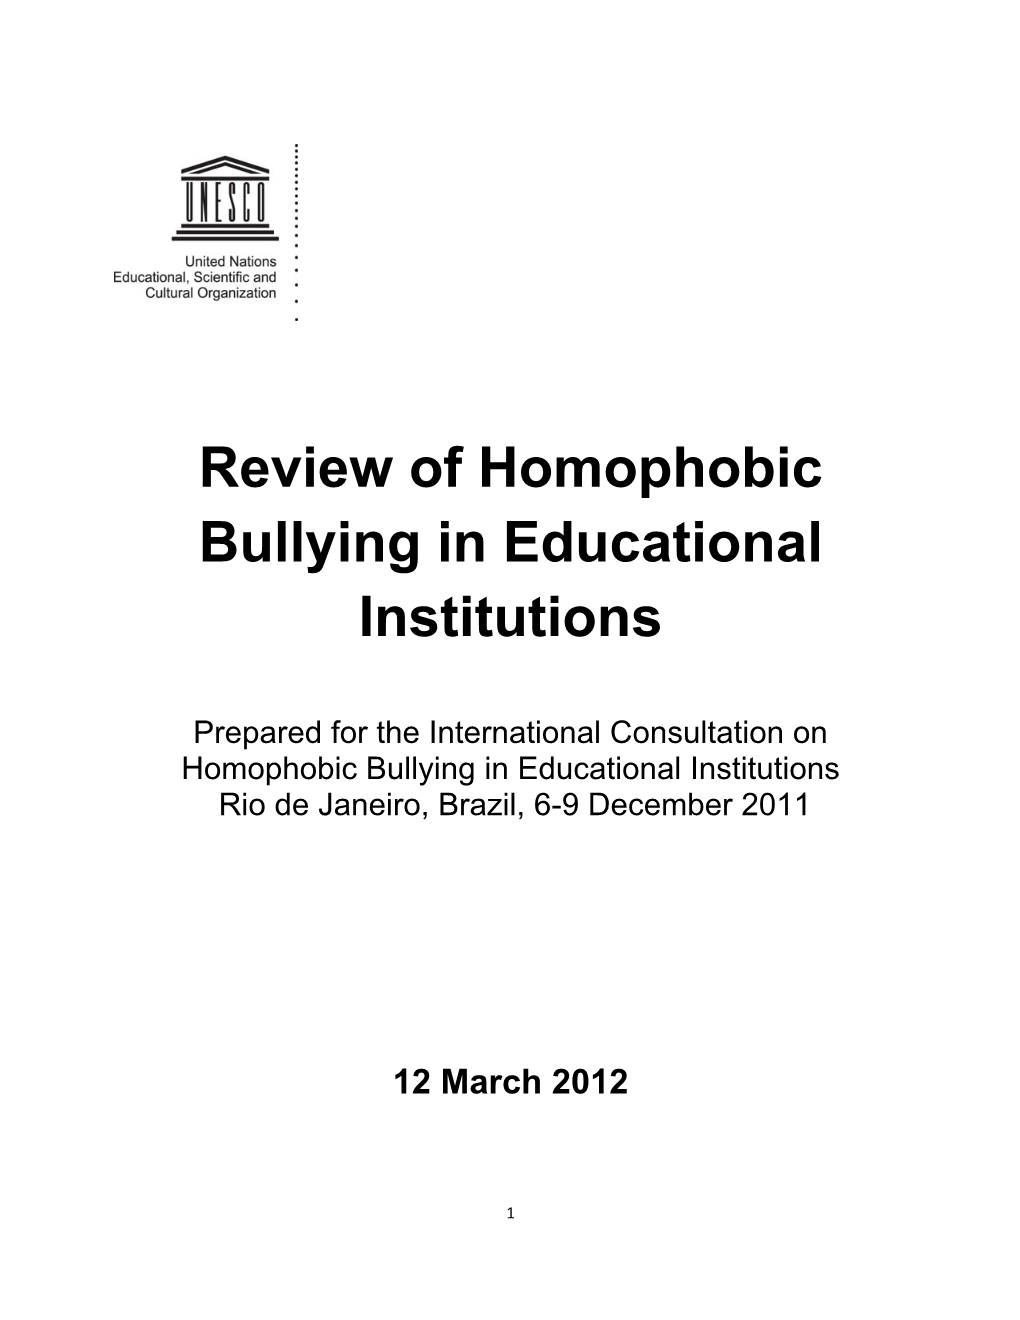 International Consultation on Homophobic Bullying in Educational Institutions Rio De Janeiro, Brazil, 6-9 December 2011